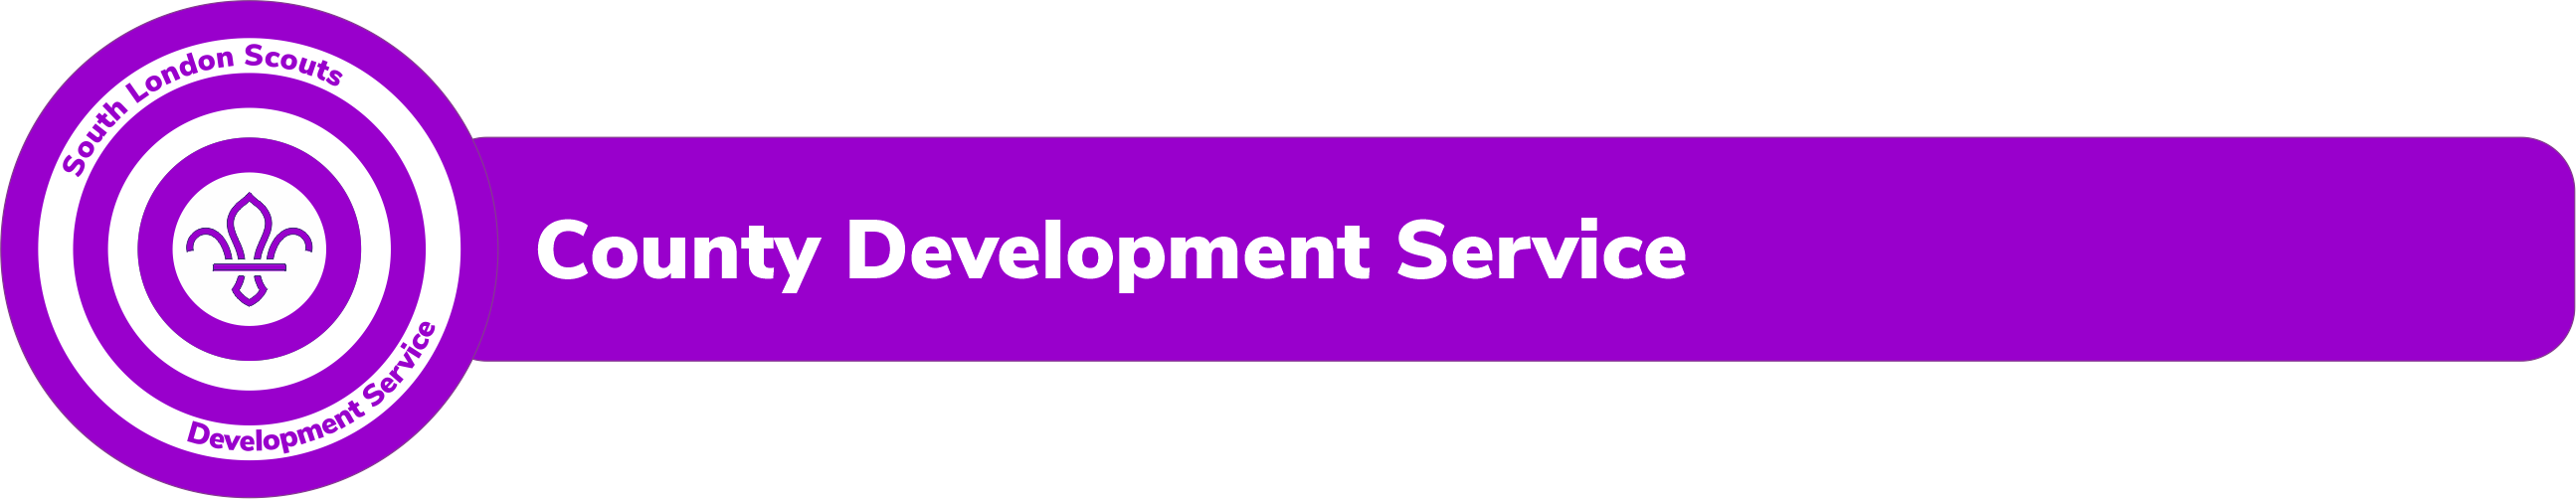 County Development Service